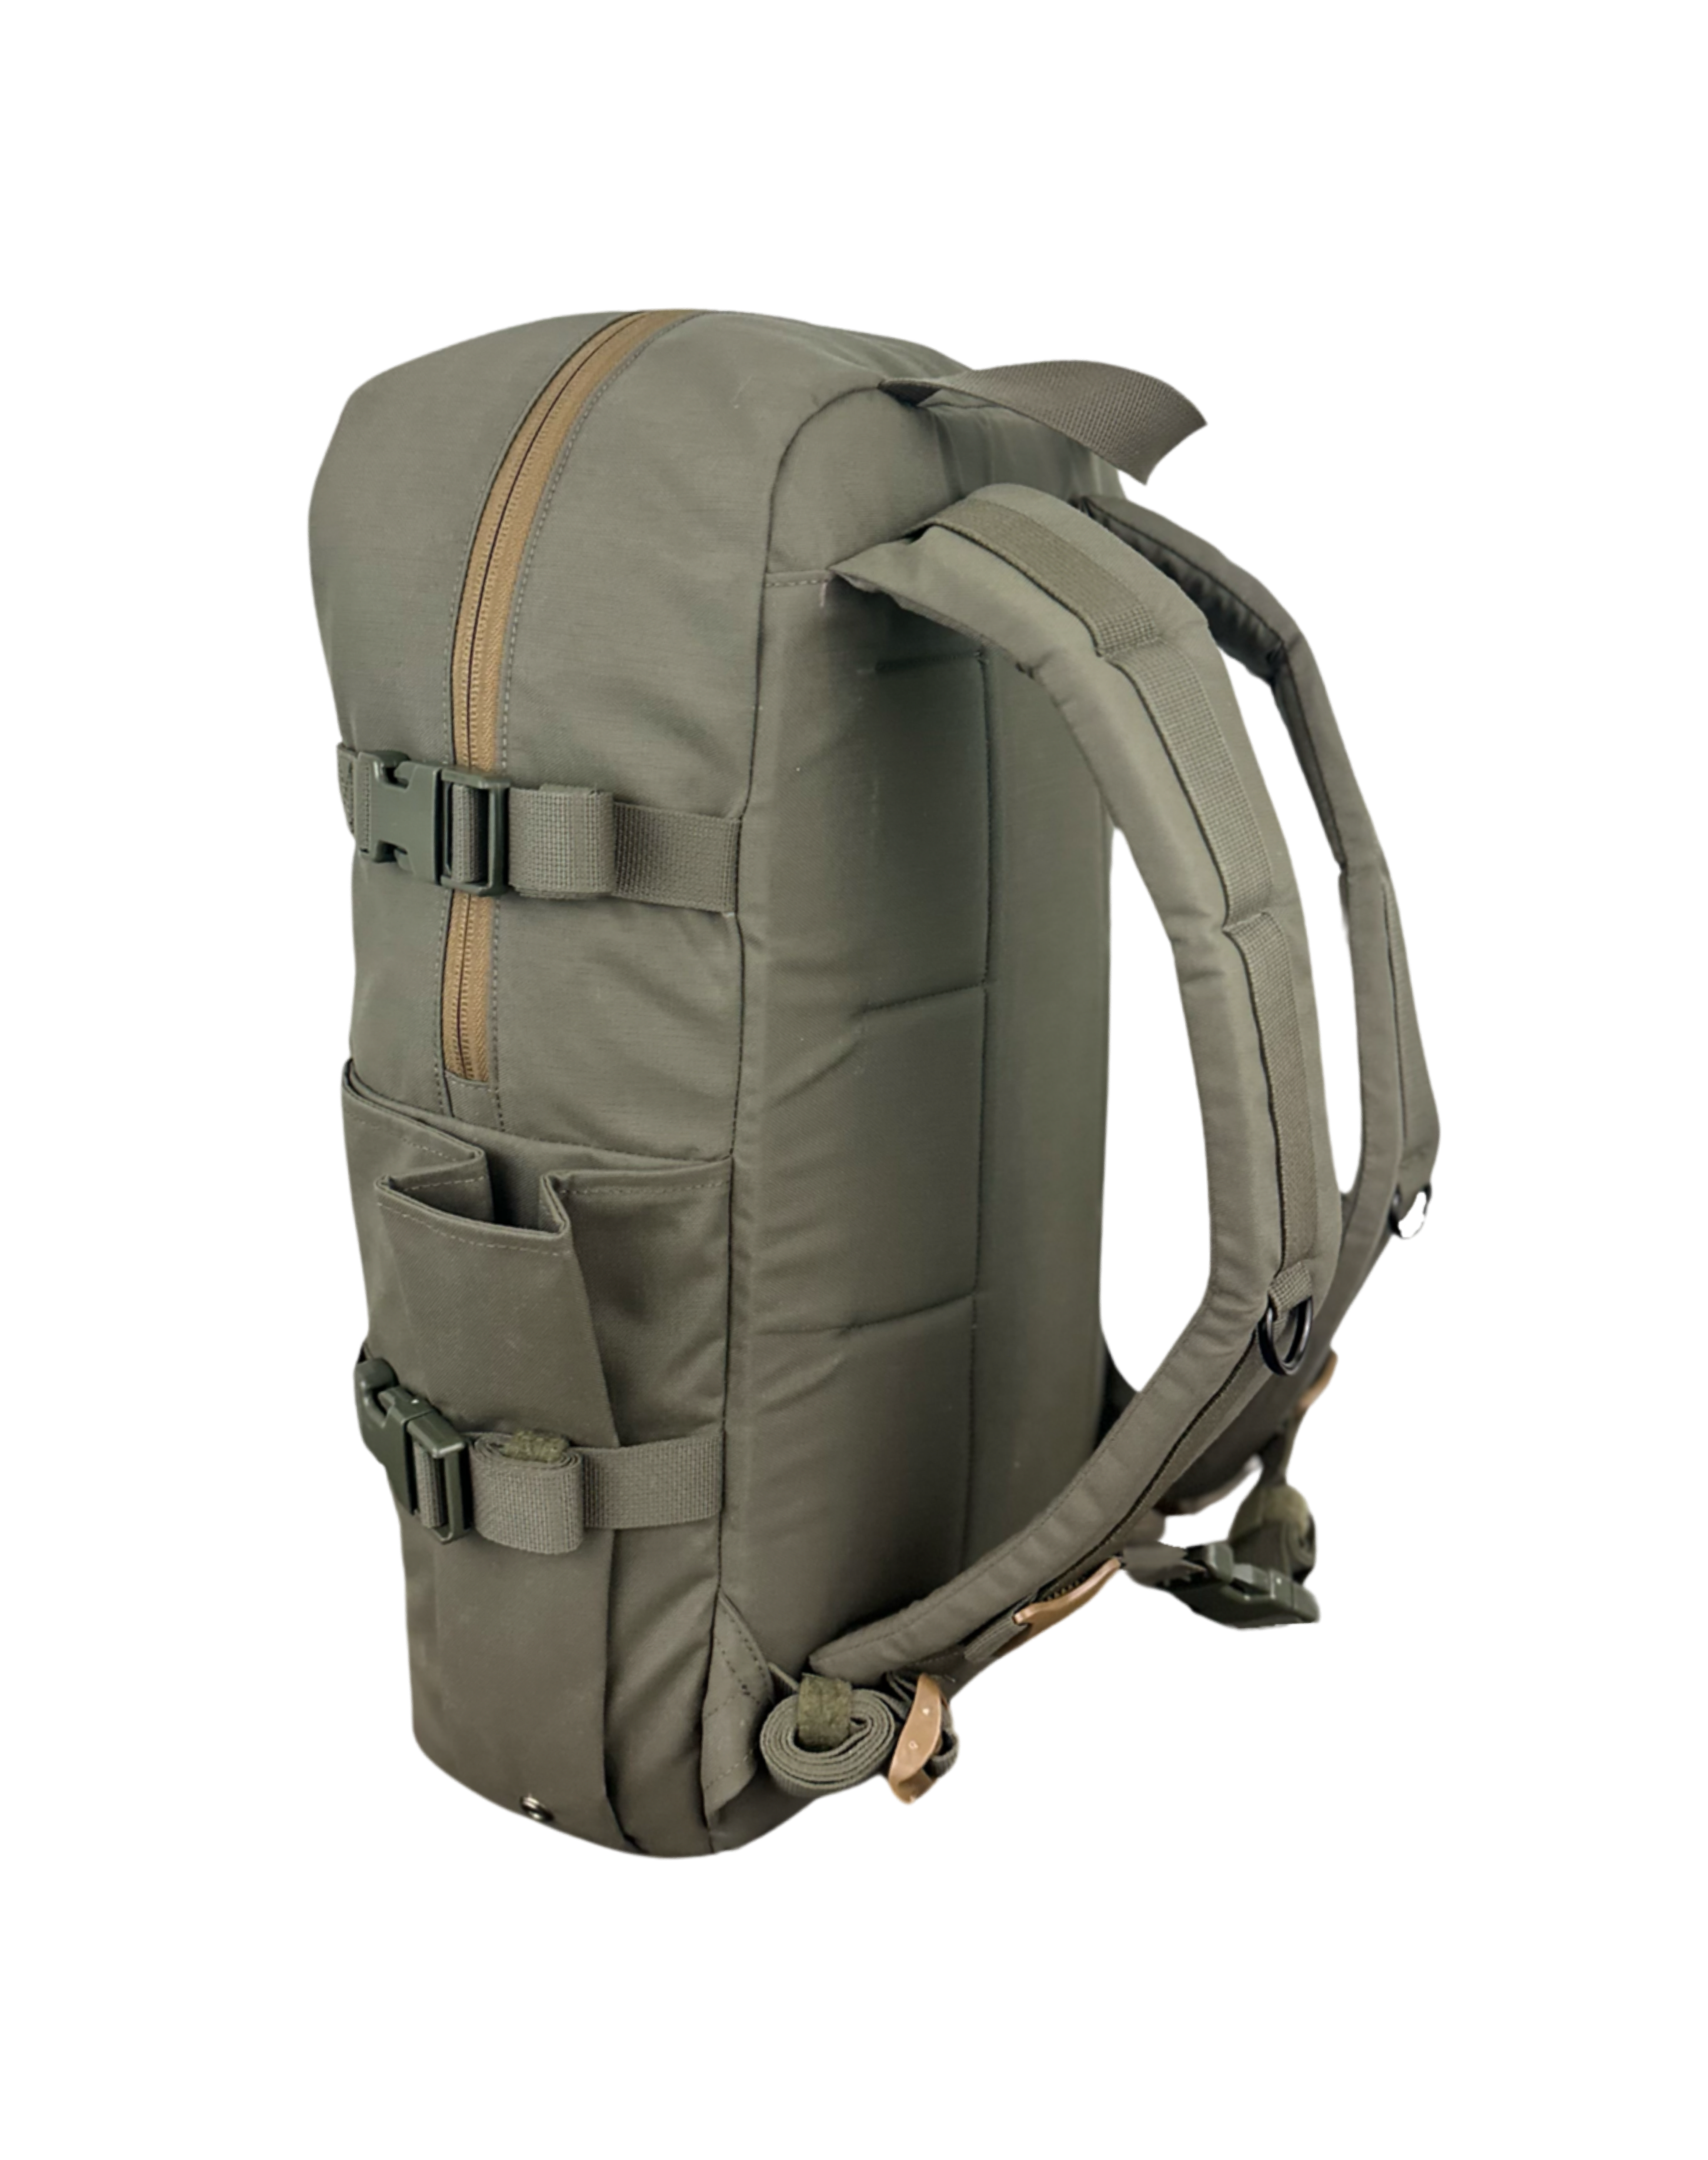 Ruckmule Koda backpack side view and shoulder straps